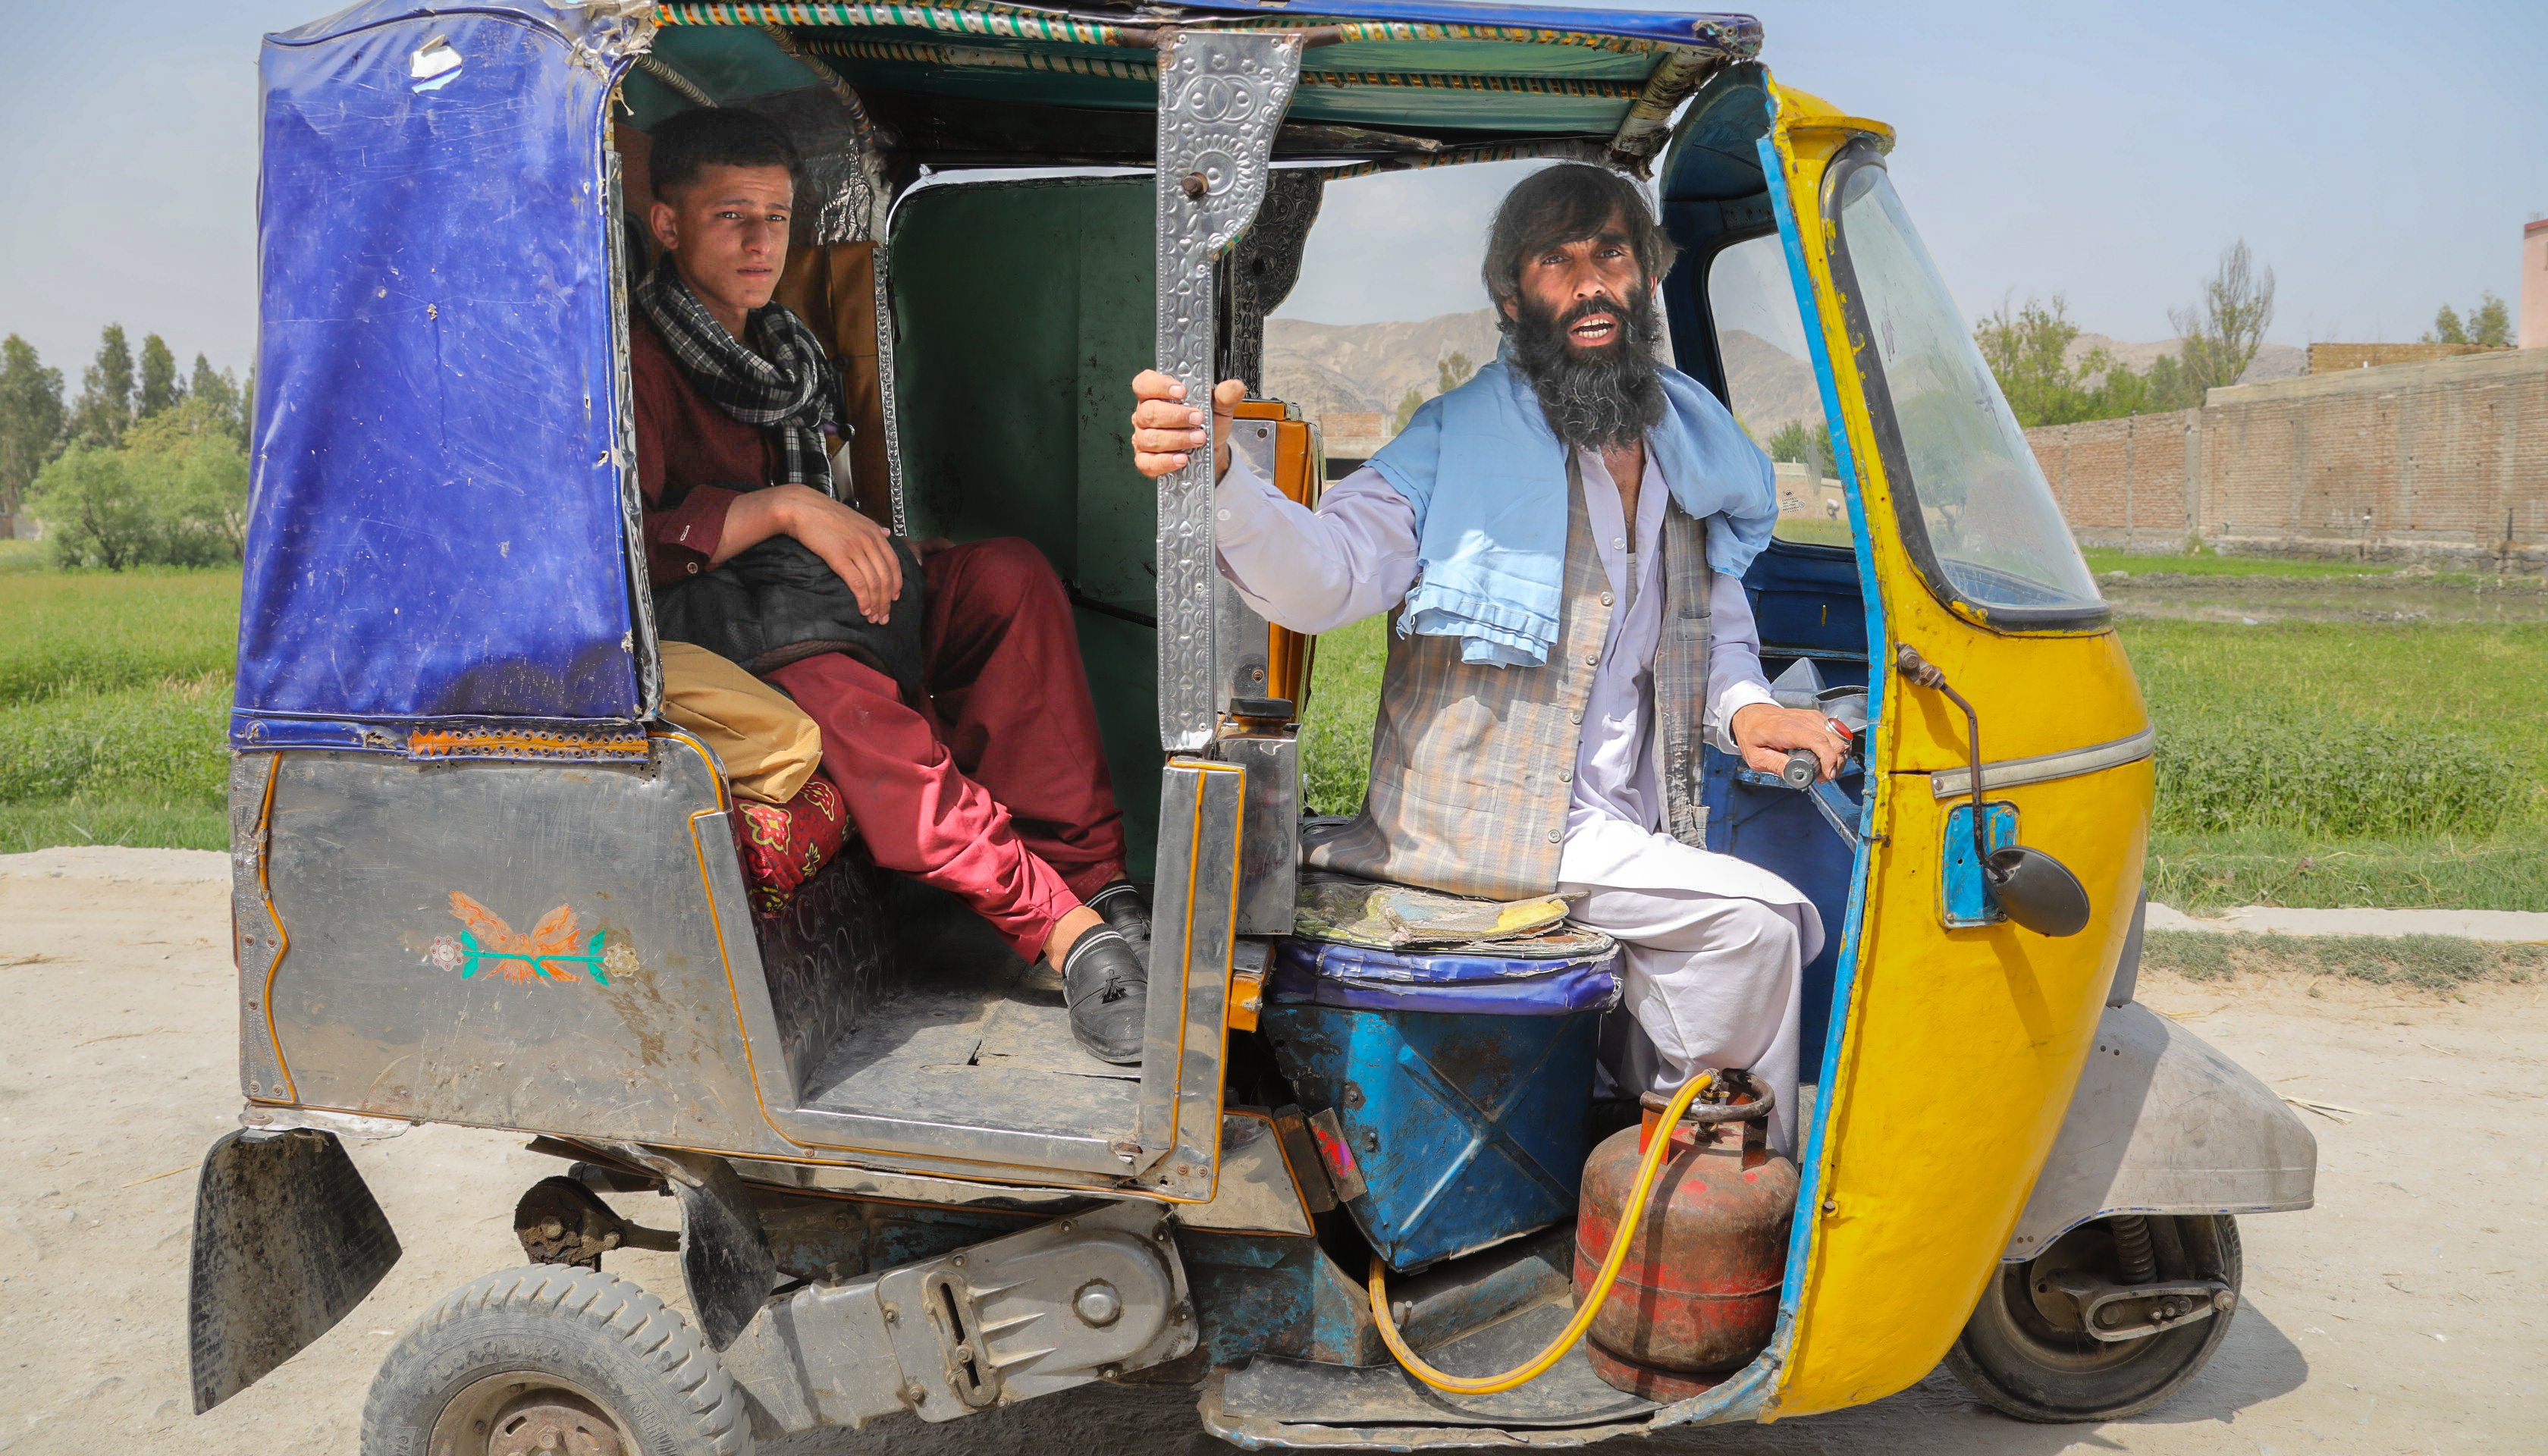 Read Goodbye, rocky road by UNDP Afghanistan